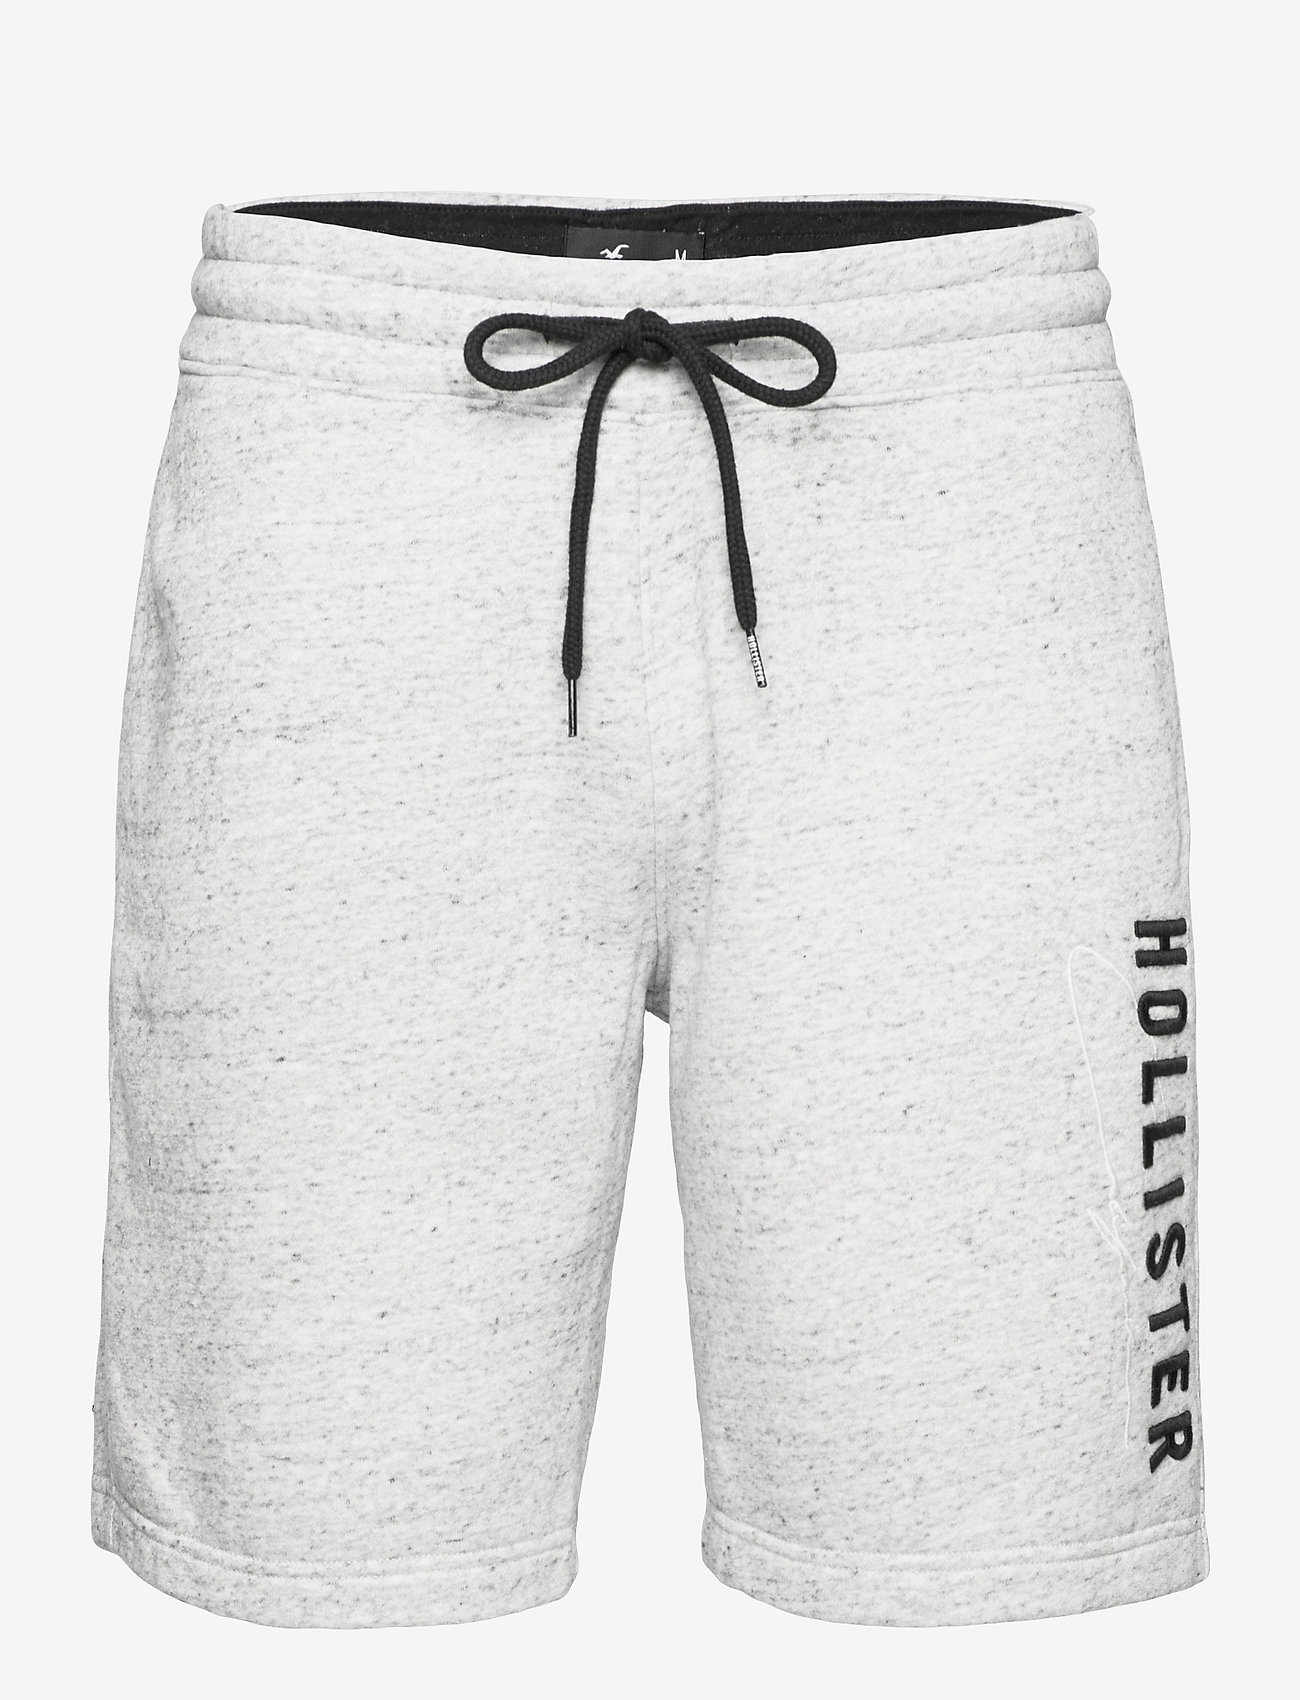 grey hollister shorts